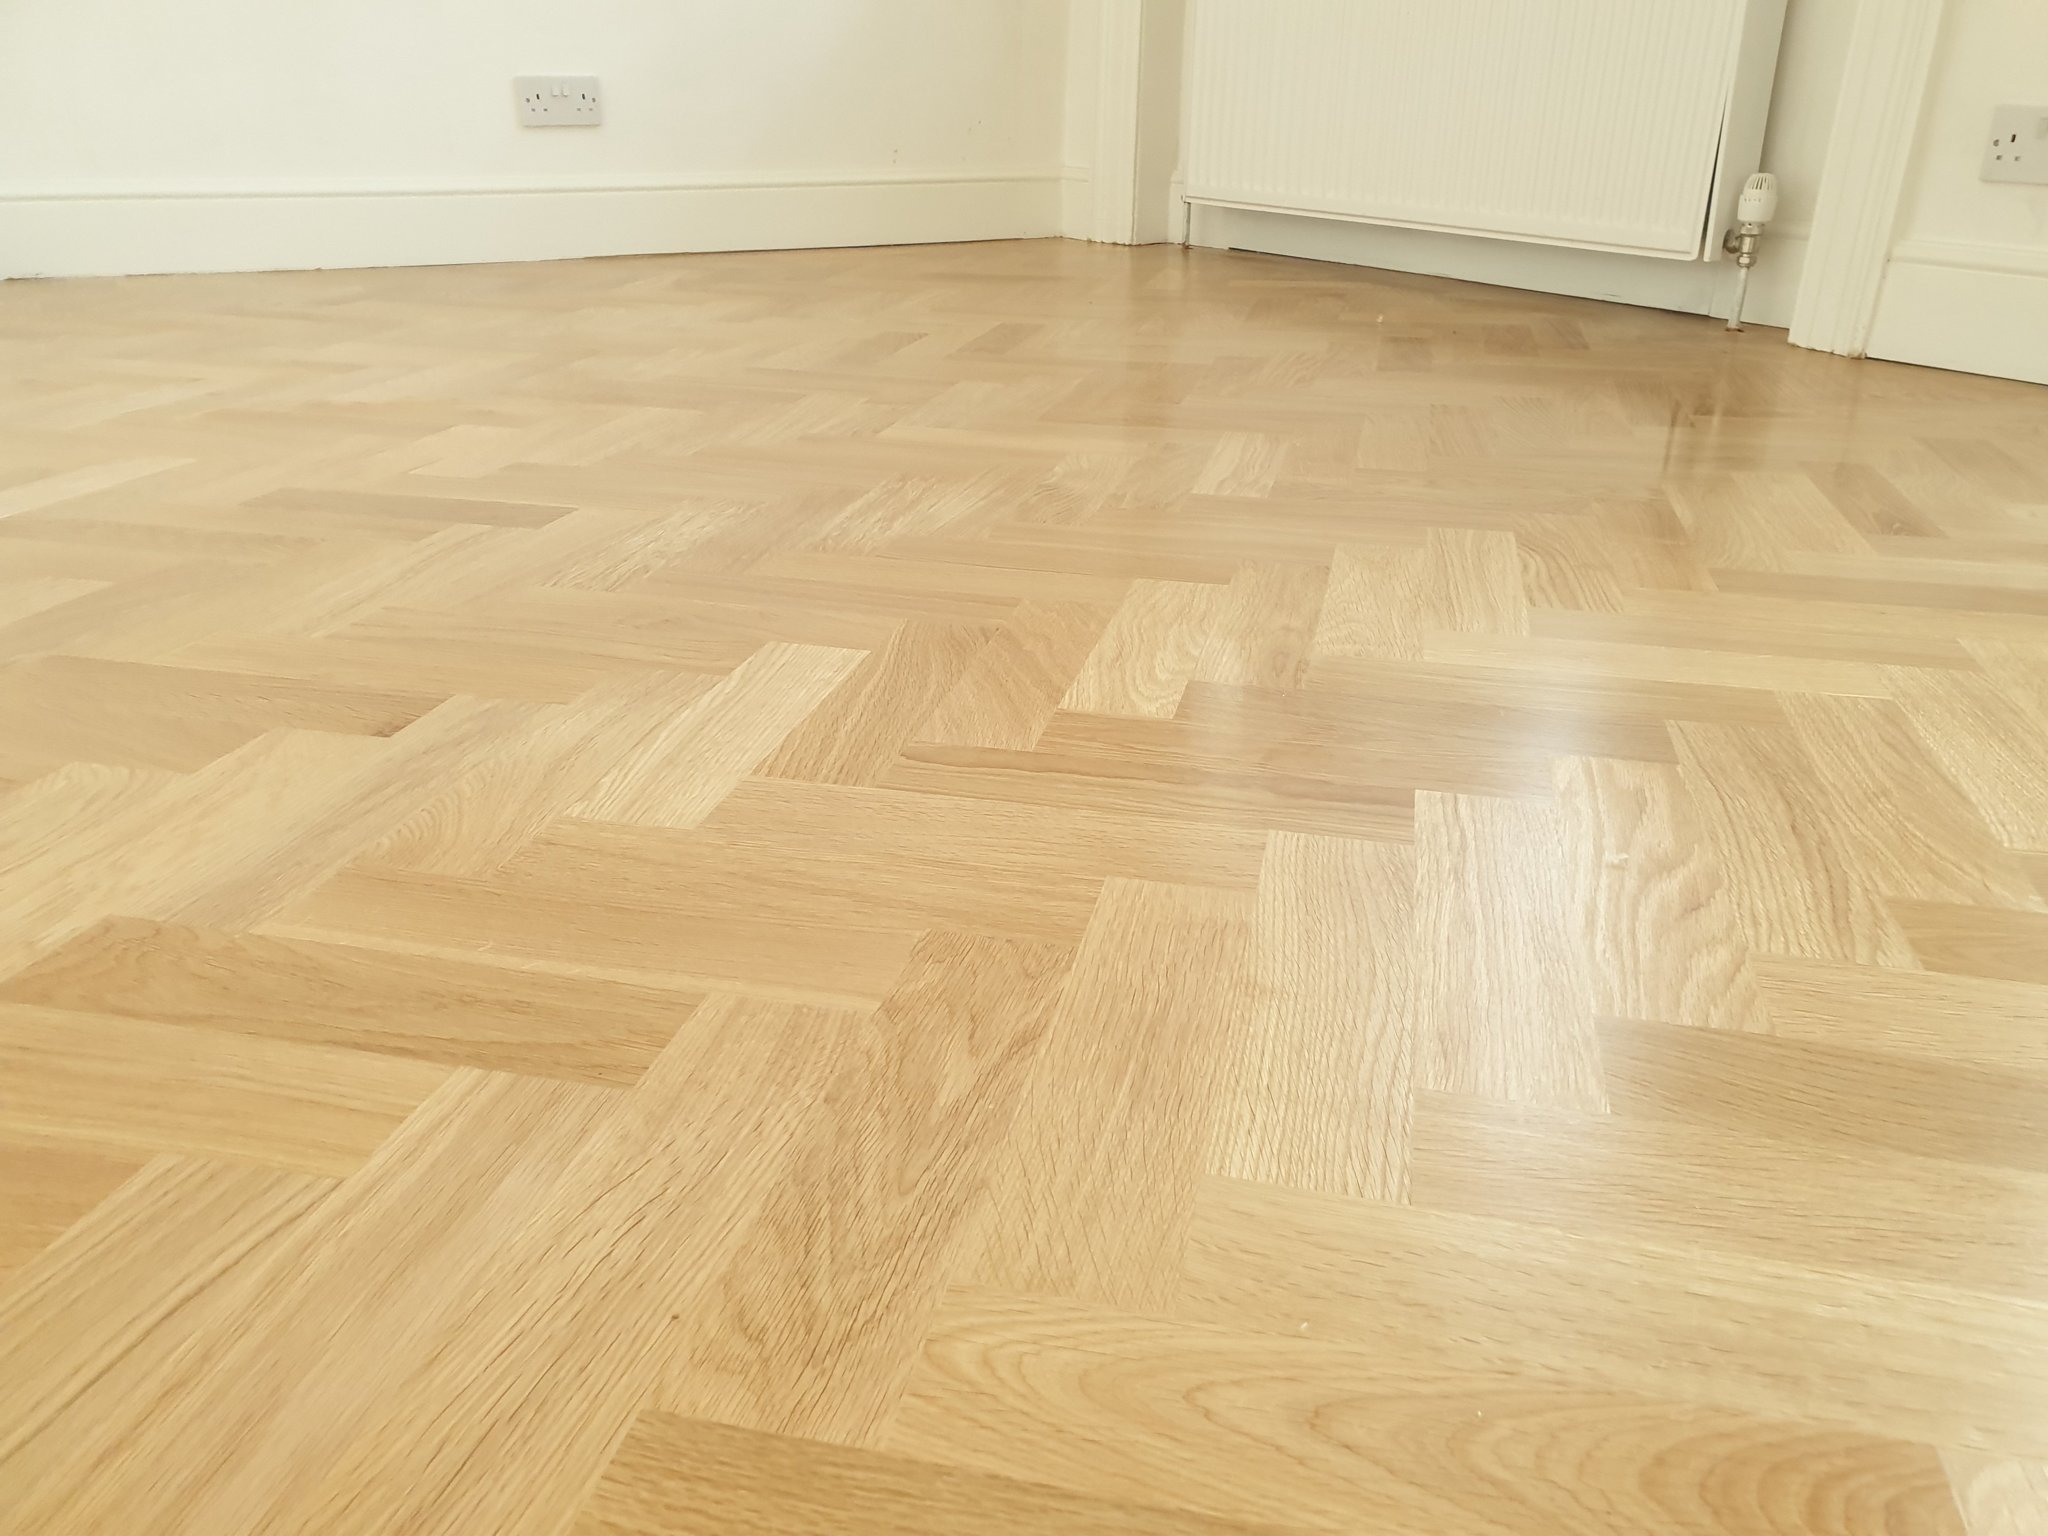 Timbercraft Oak Parquet Flooring, Prime, Unfinished, 70x22x280 Mm image